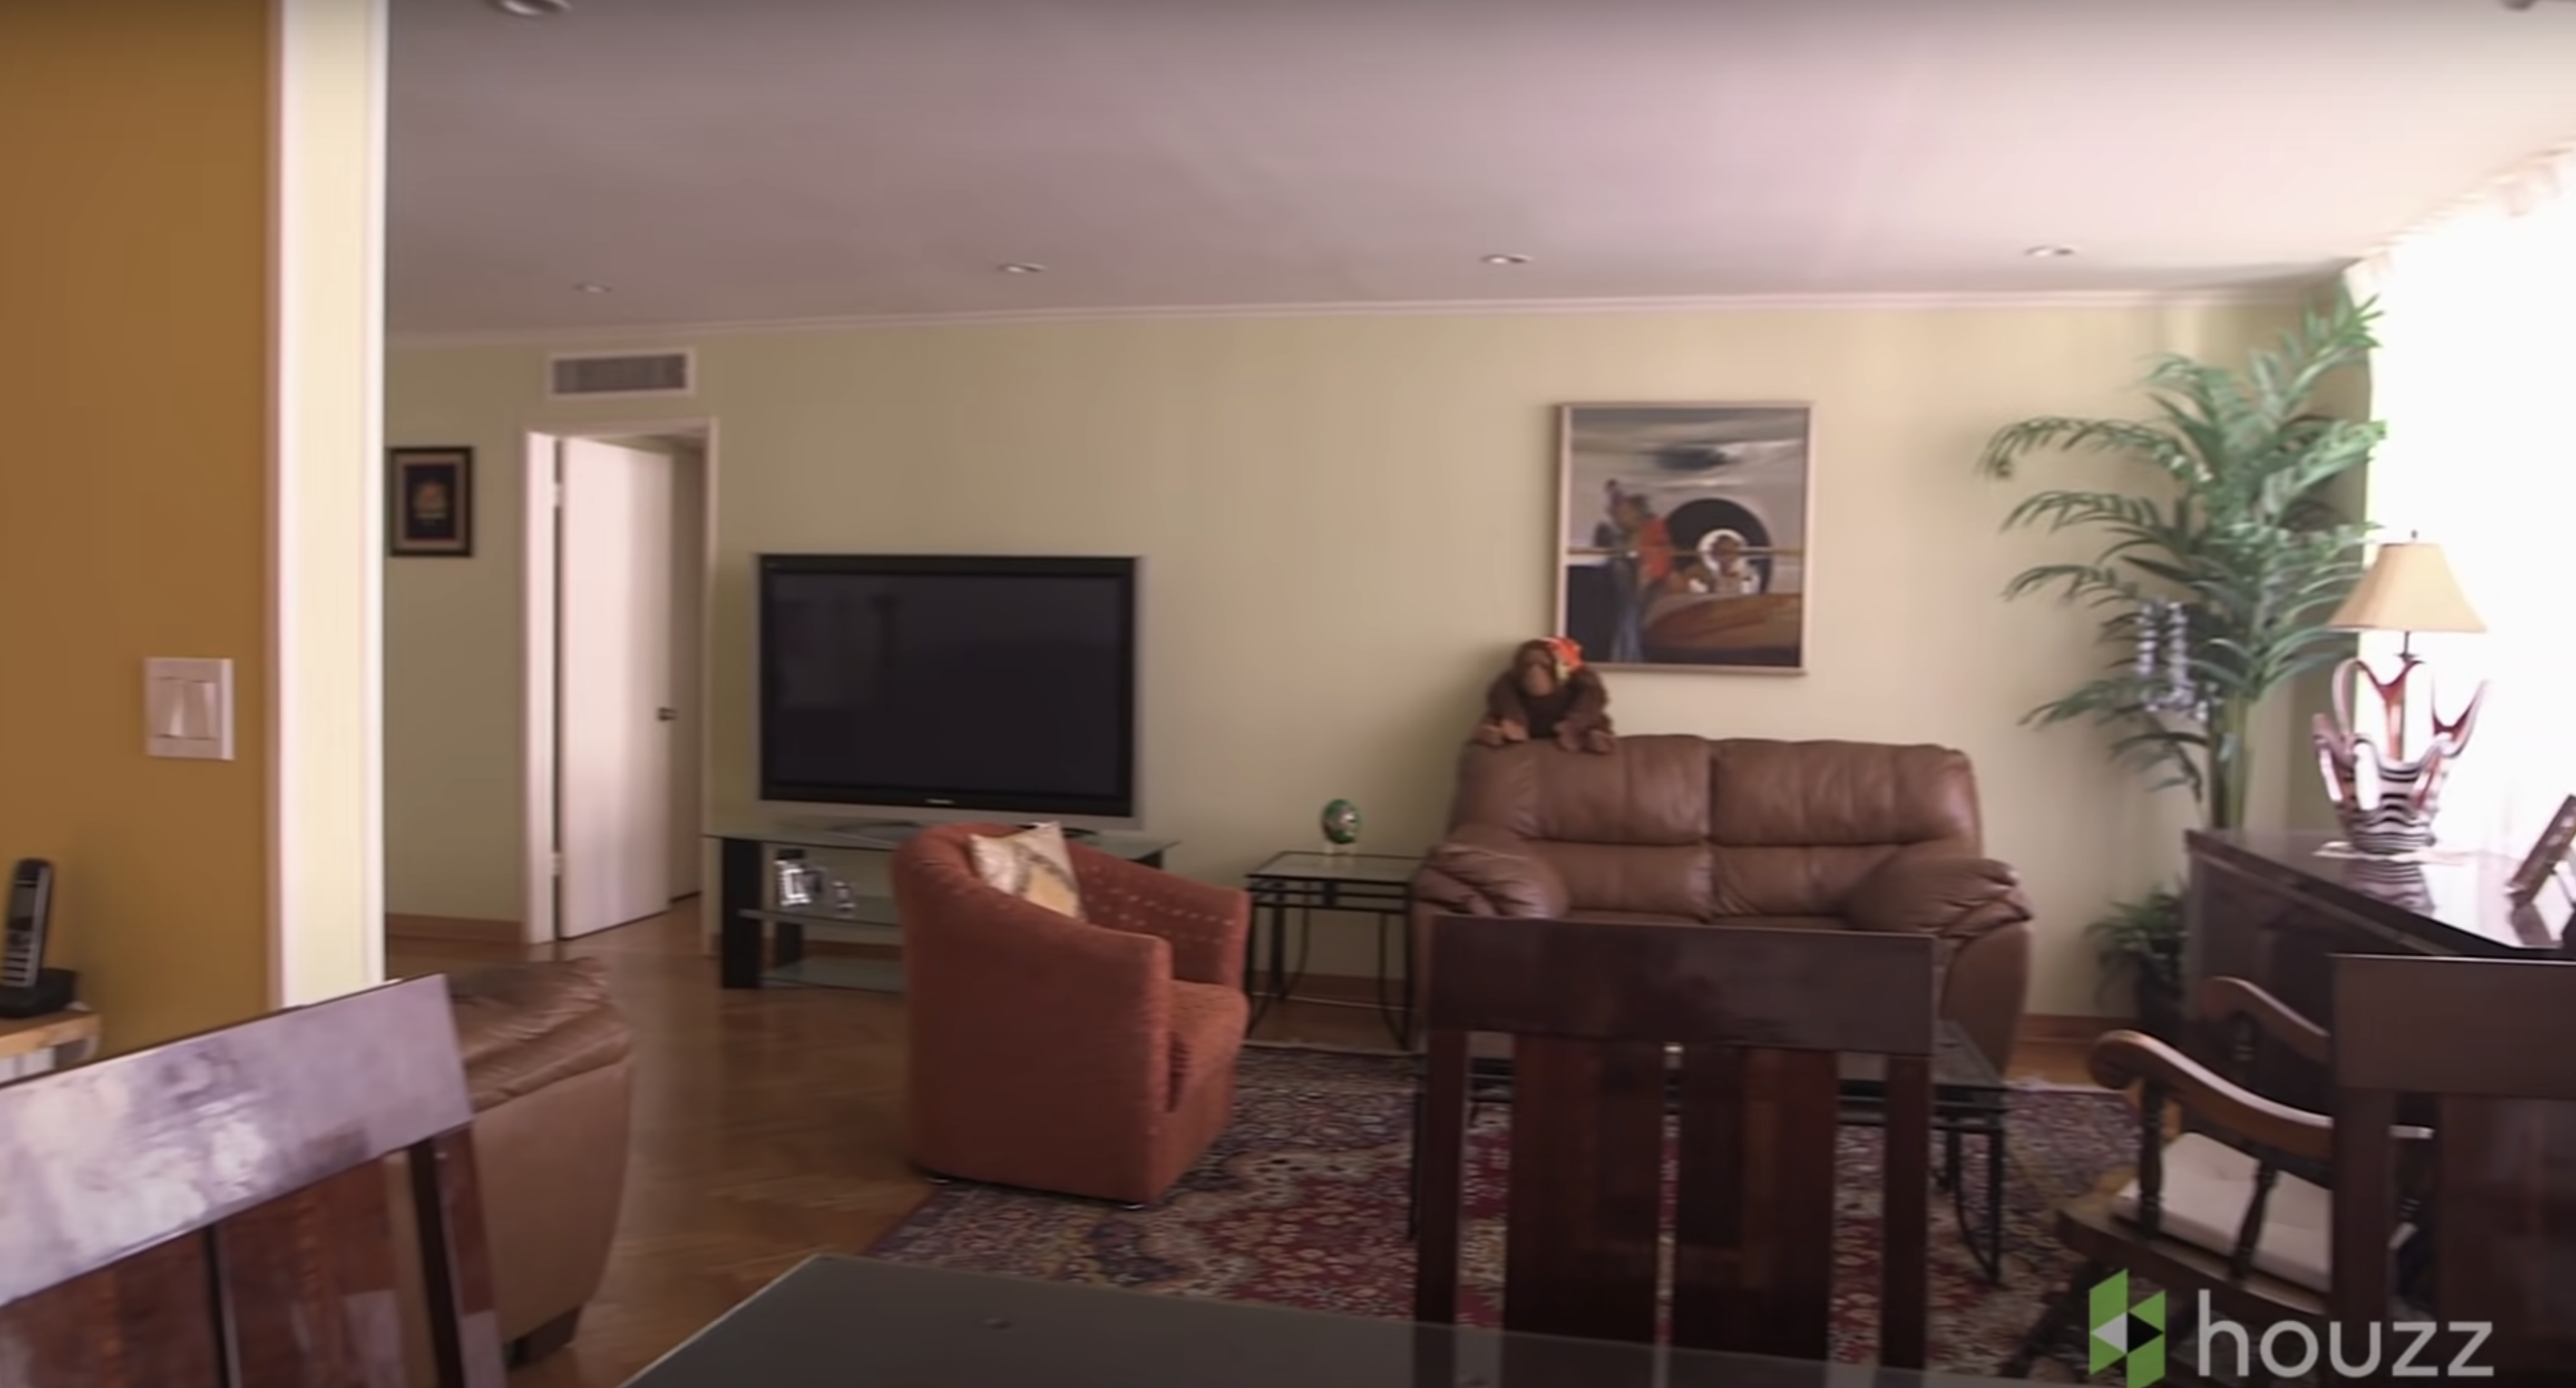 The living room of Mila Kunis' parents' condo | Source: Youtube.com/HouzzTV